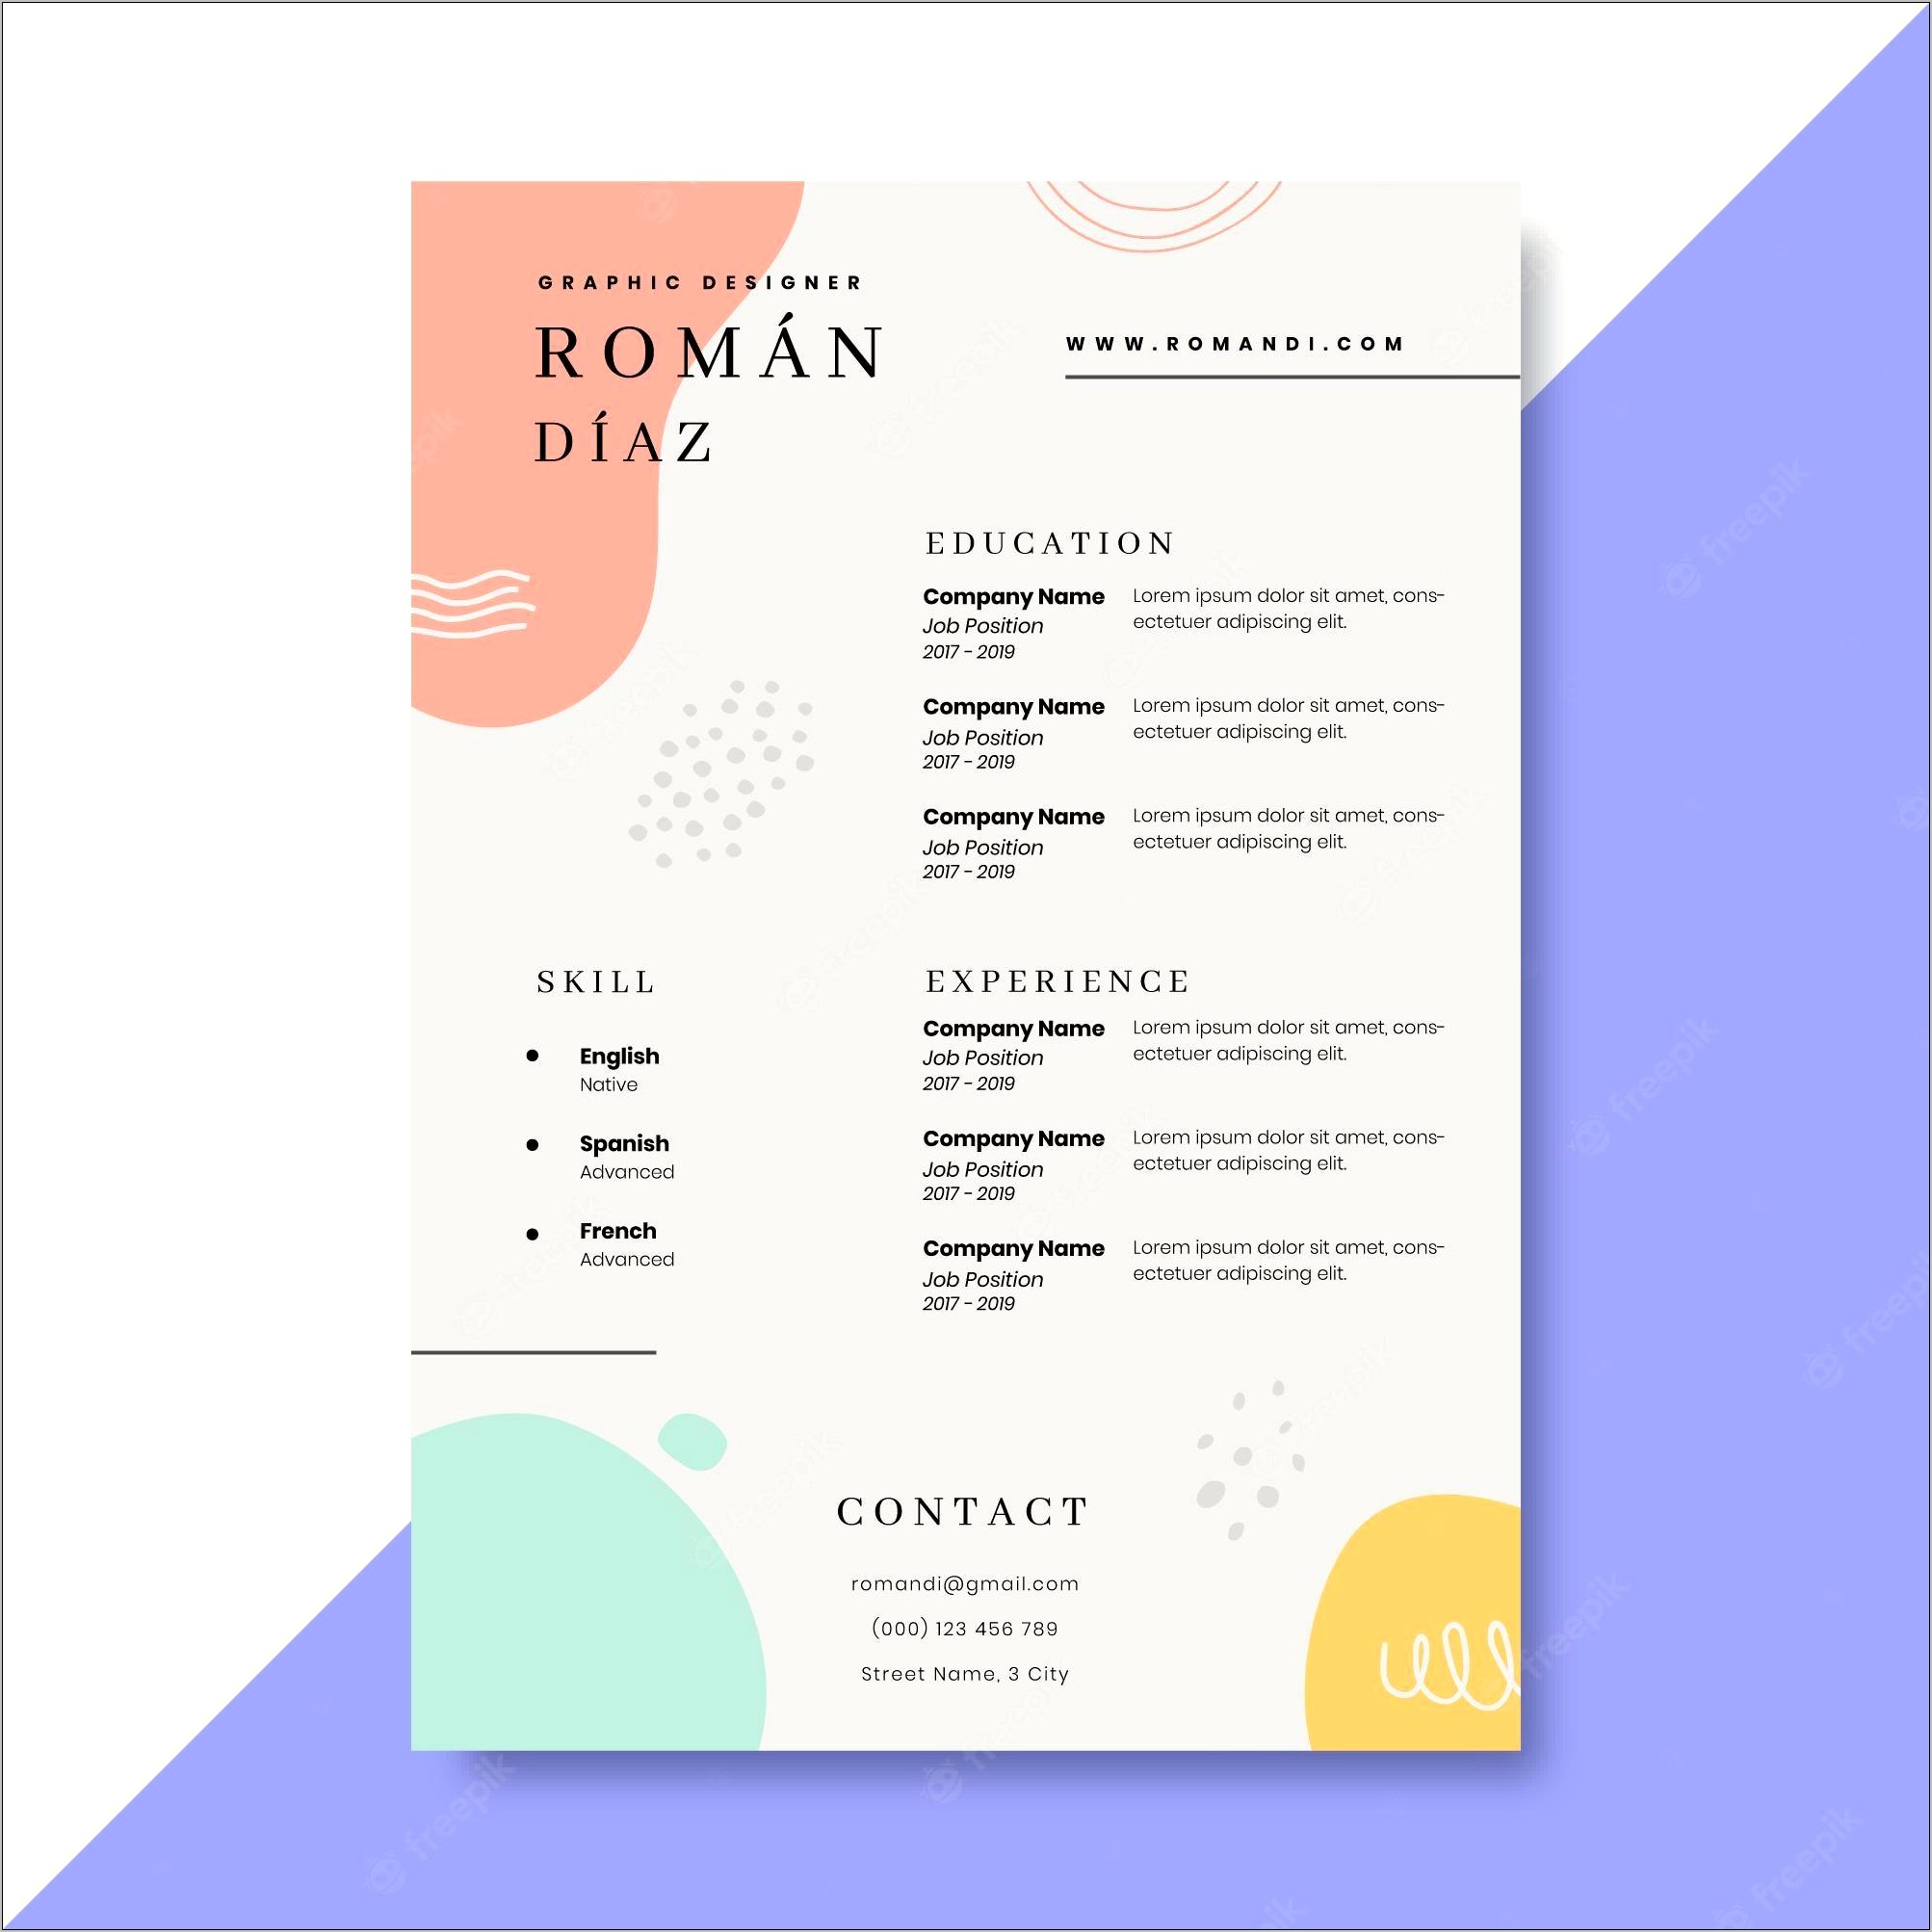 Graphic Design Resume Examples 2017